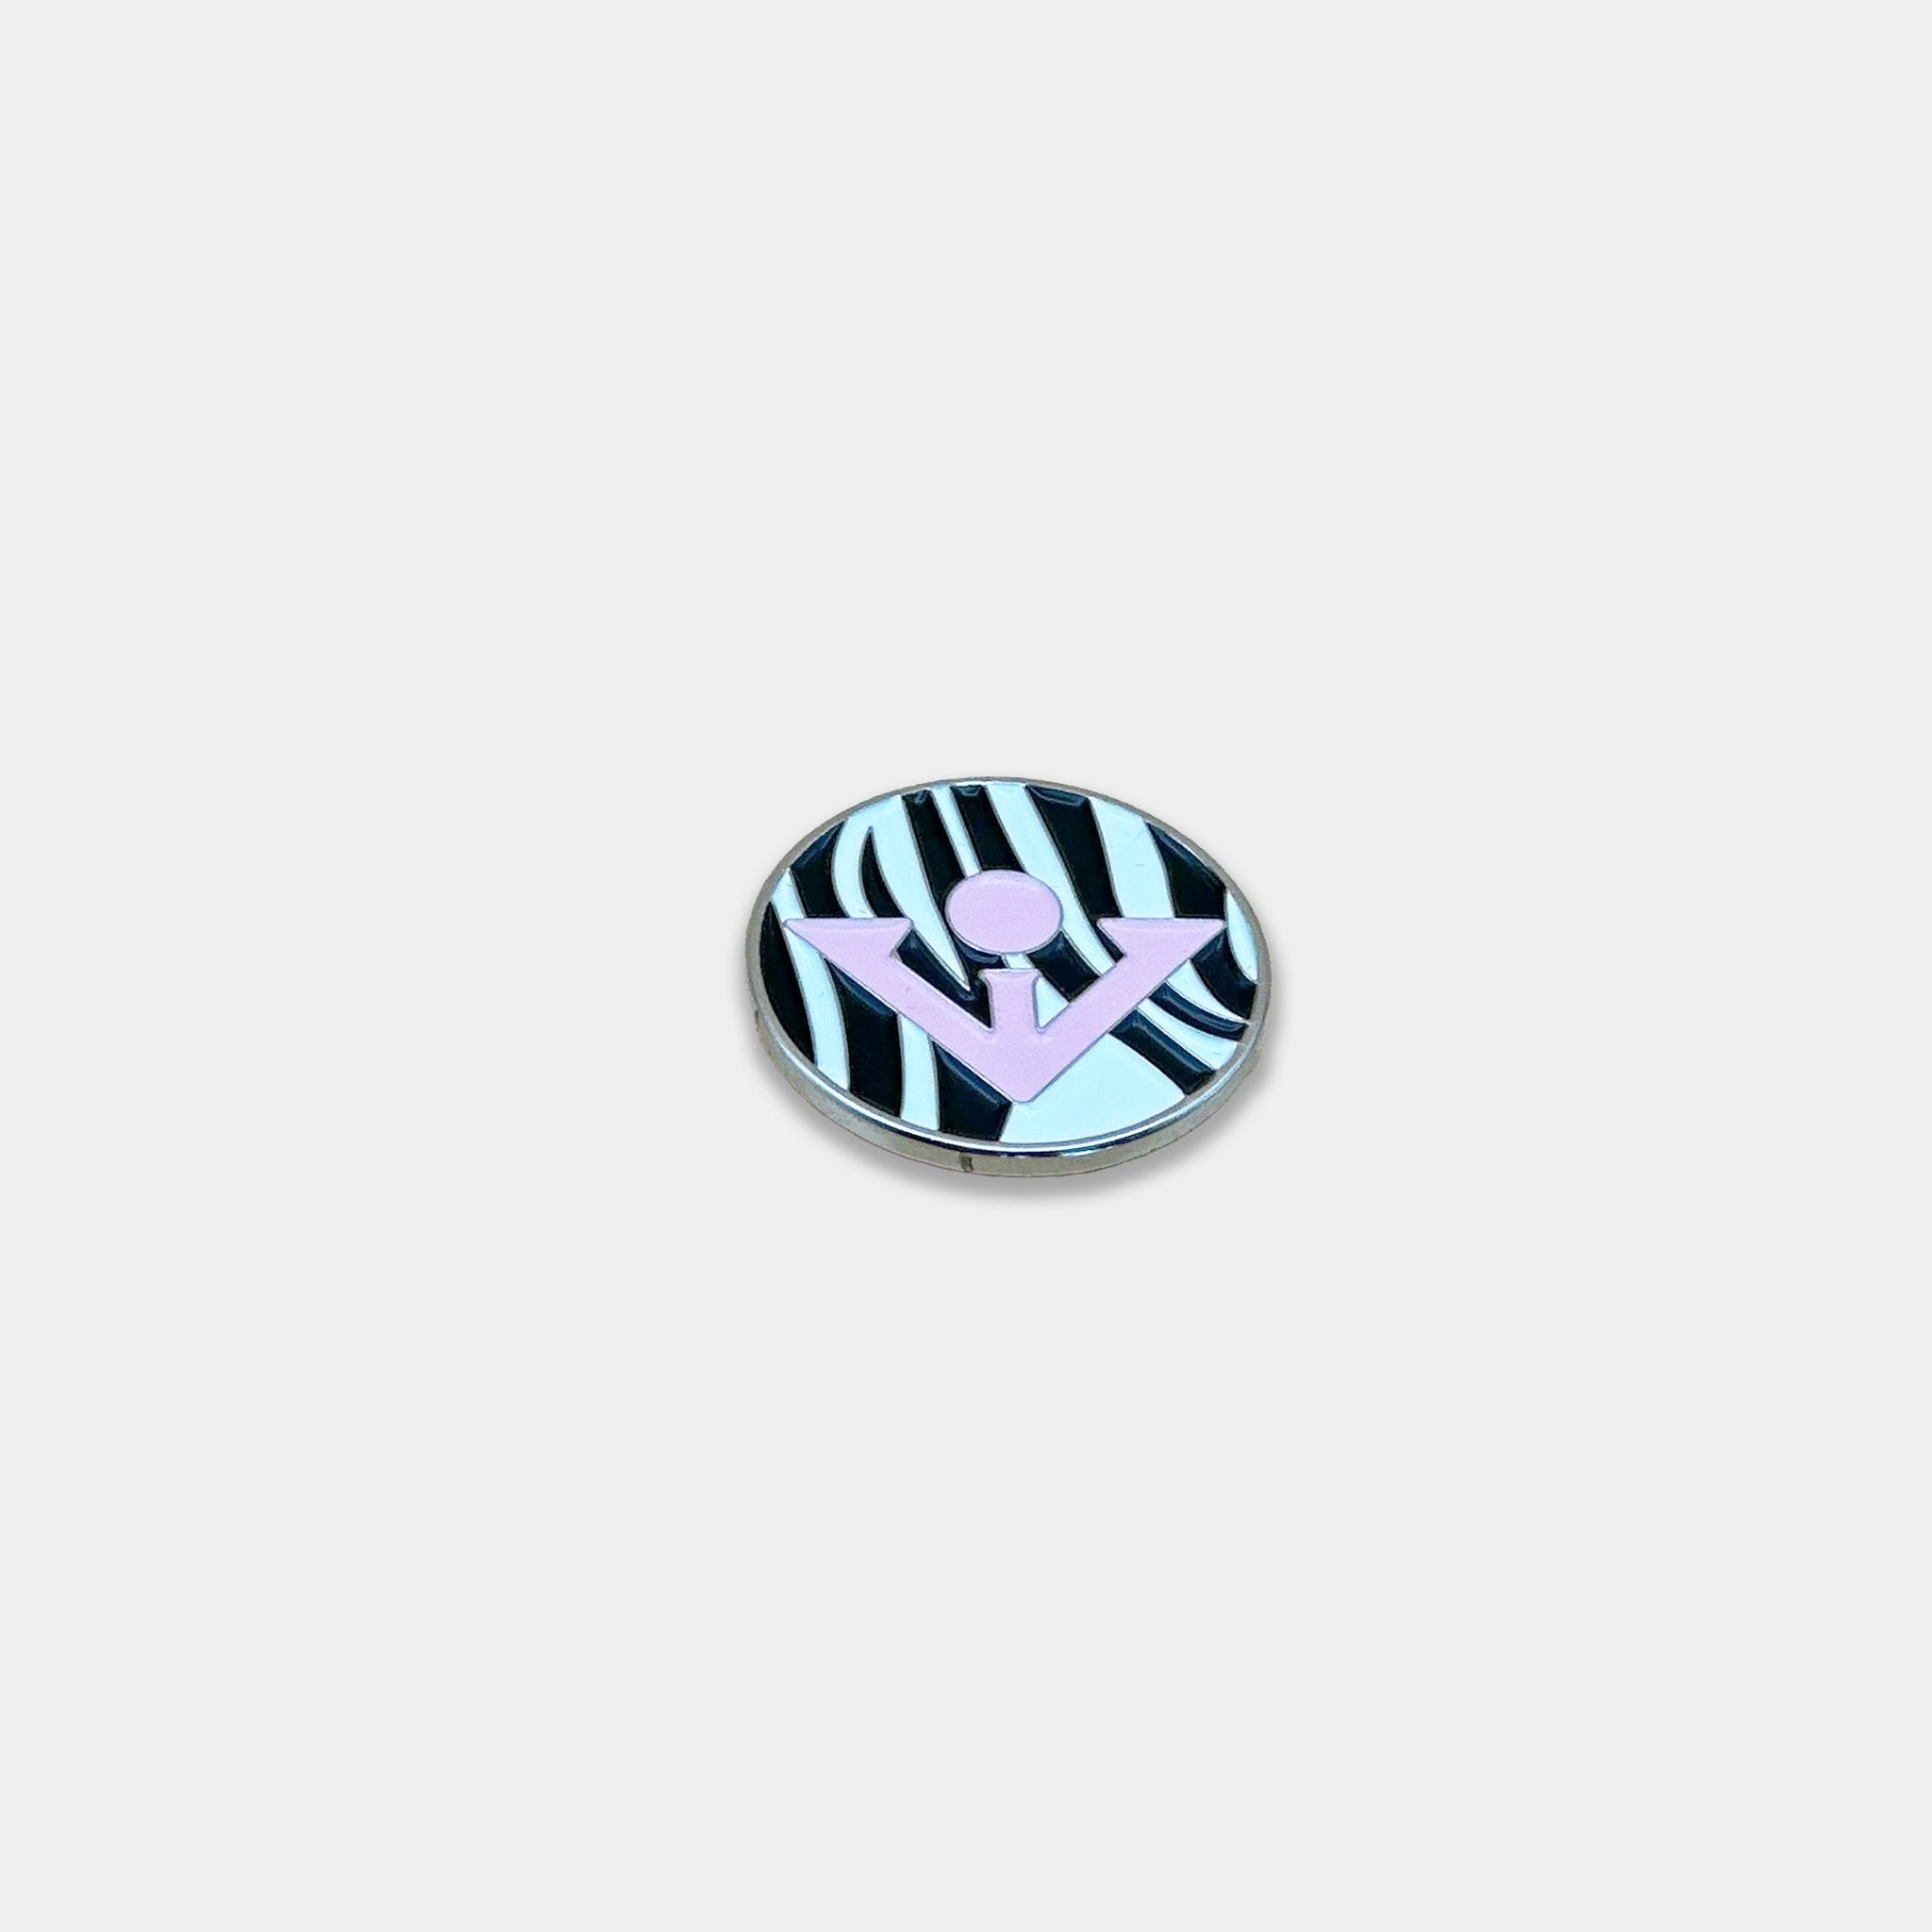 Safari Spotter, Zebra printed magnetic golf ball marker with pink VivanTee logo.